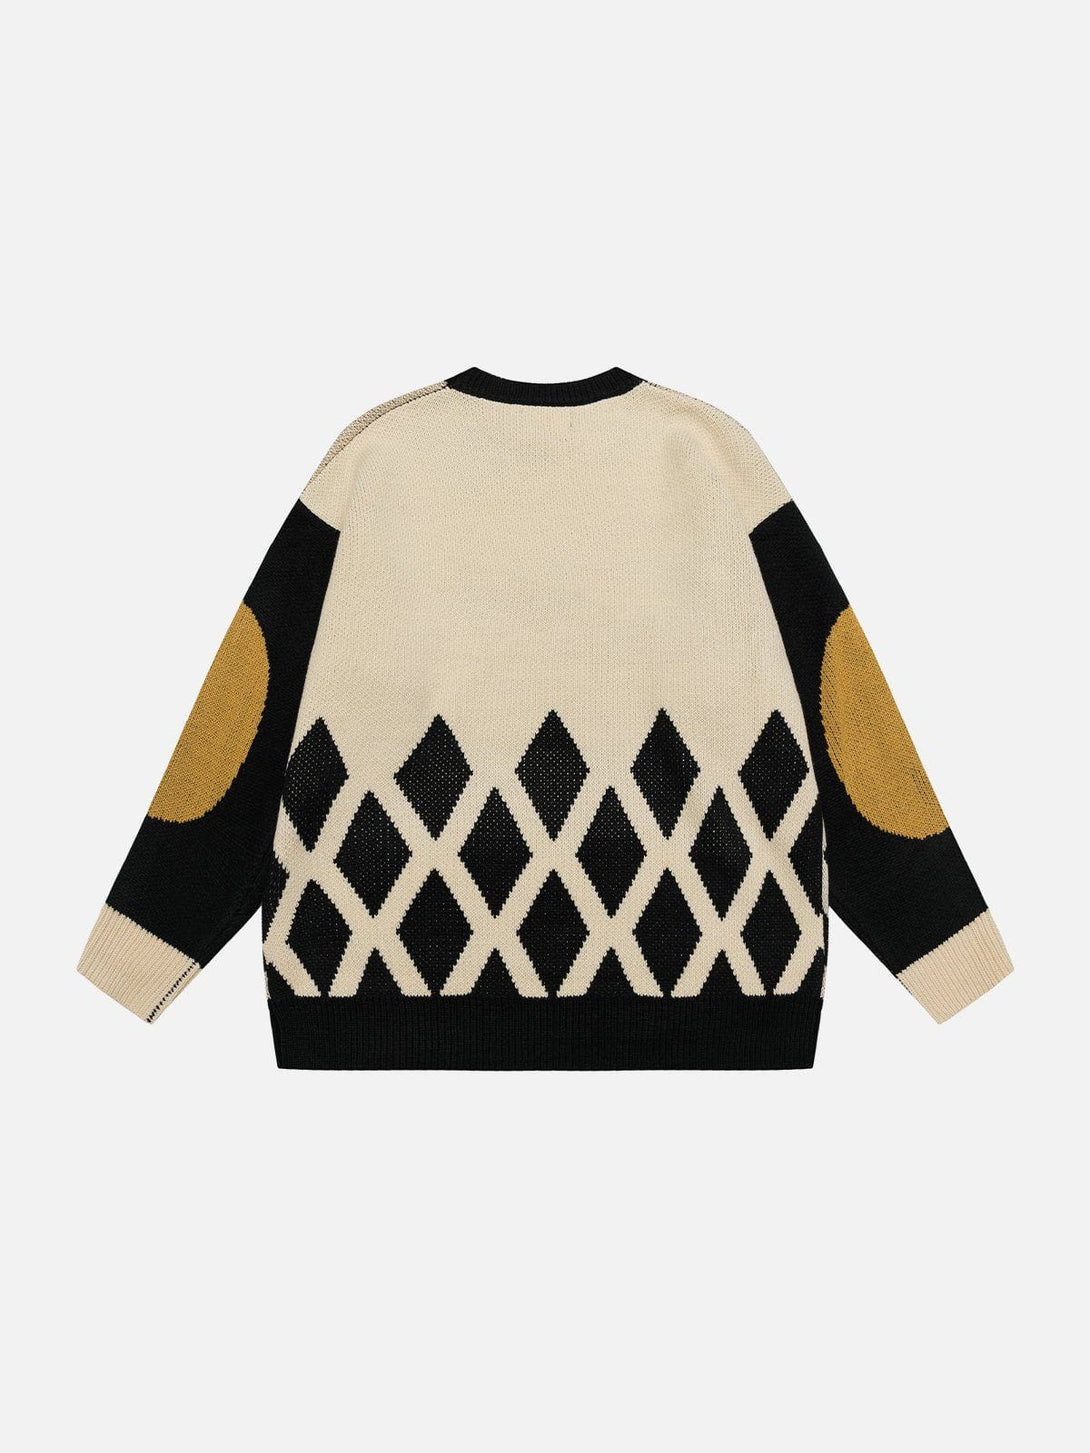 Majesda® - Doggy Grid Jacquard Sweater outfit ideas streetwear fashion